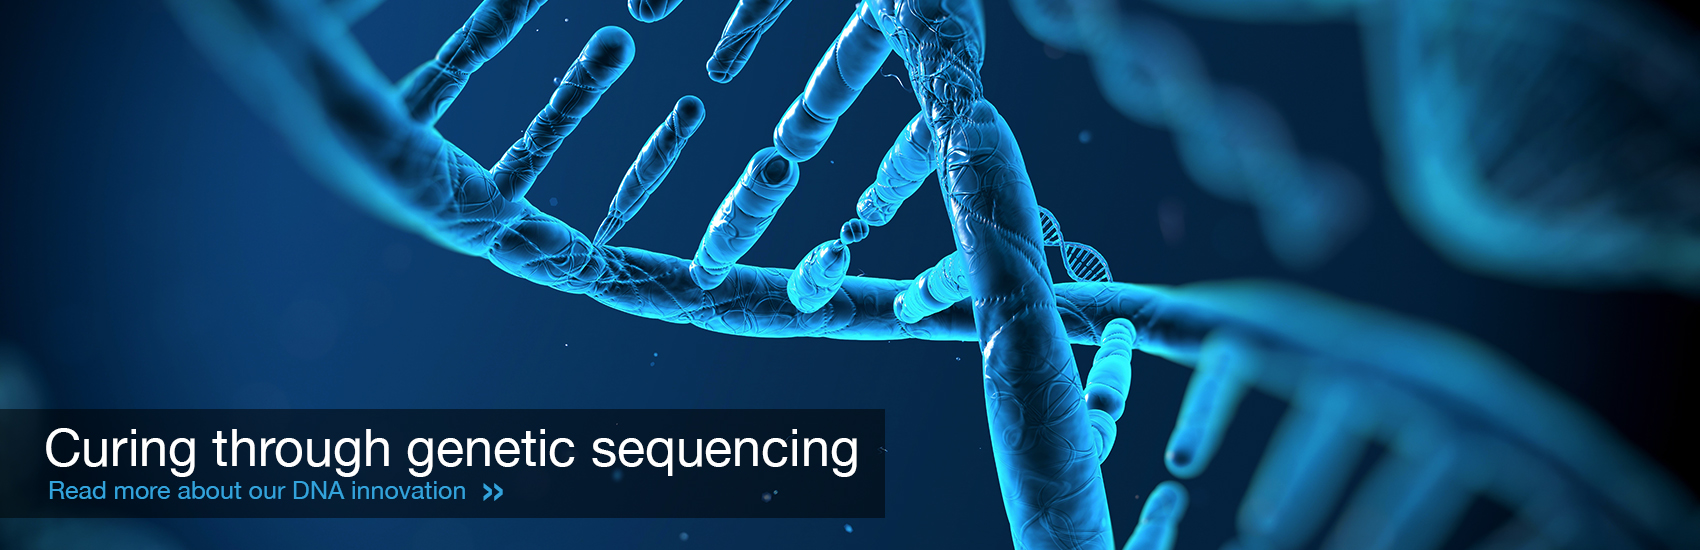 WATTII genetic sequencing